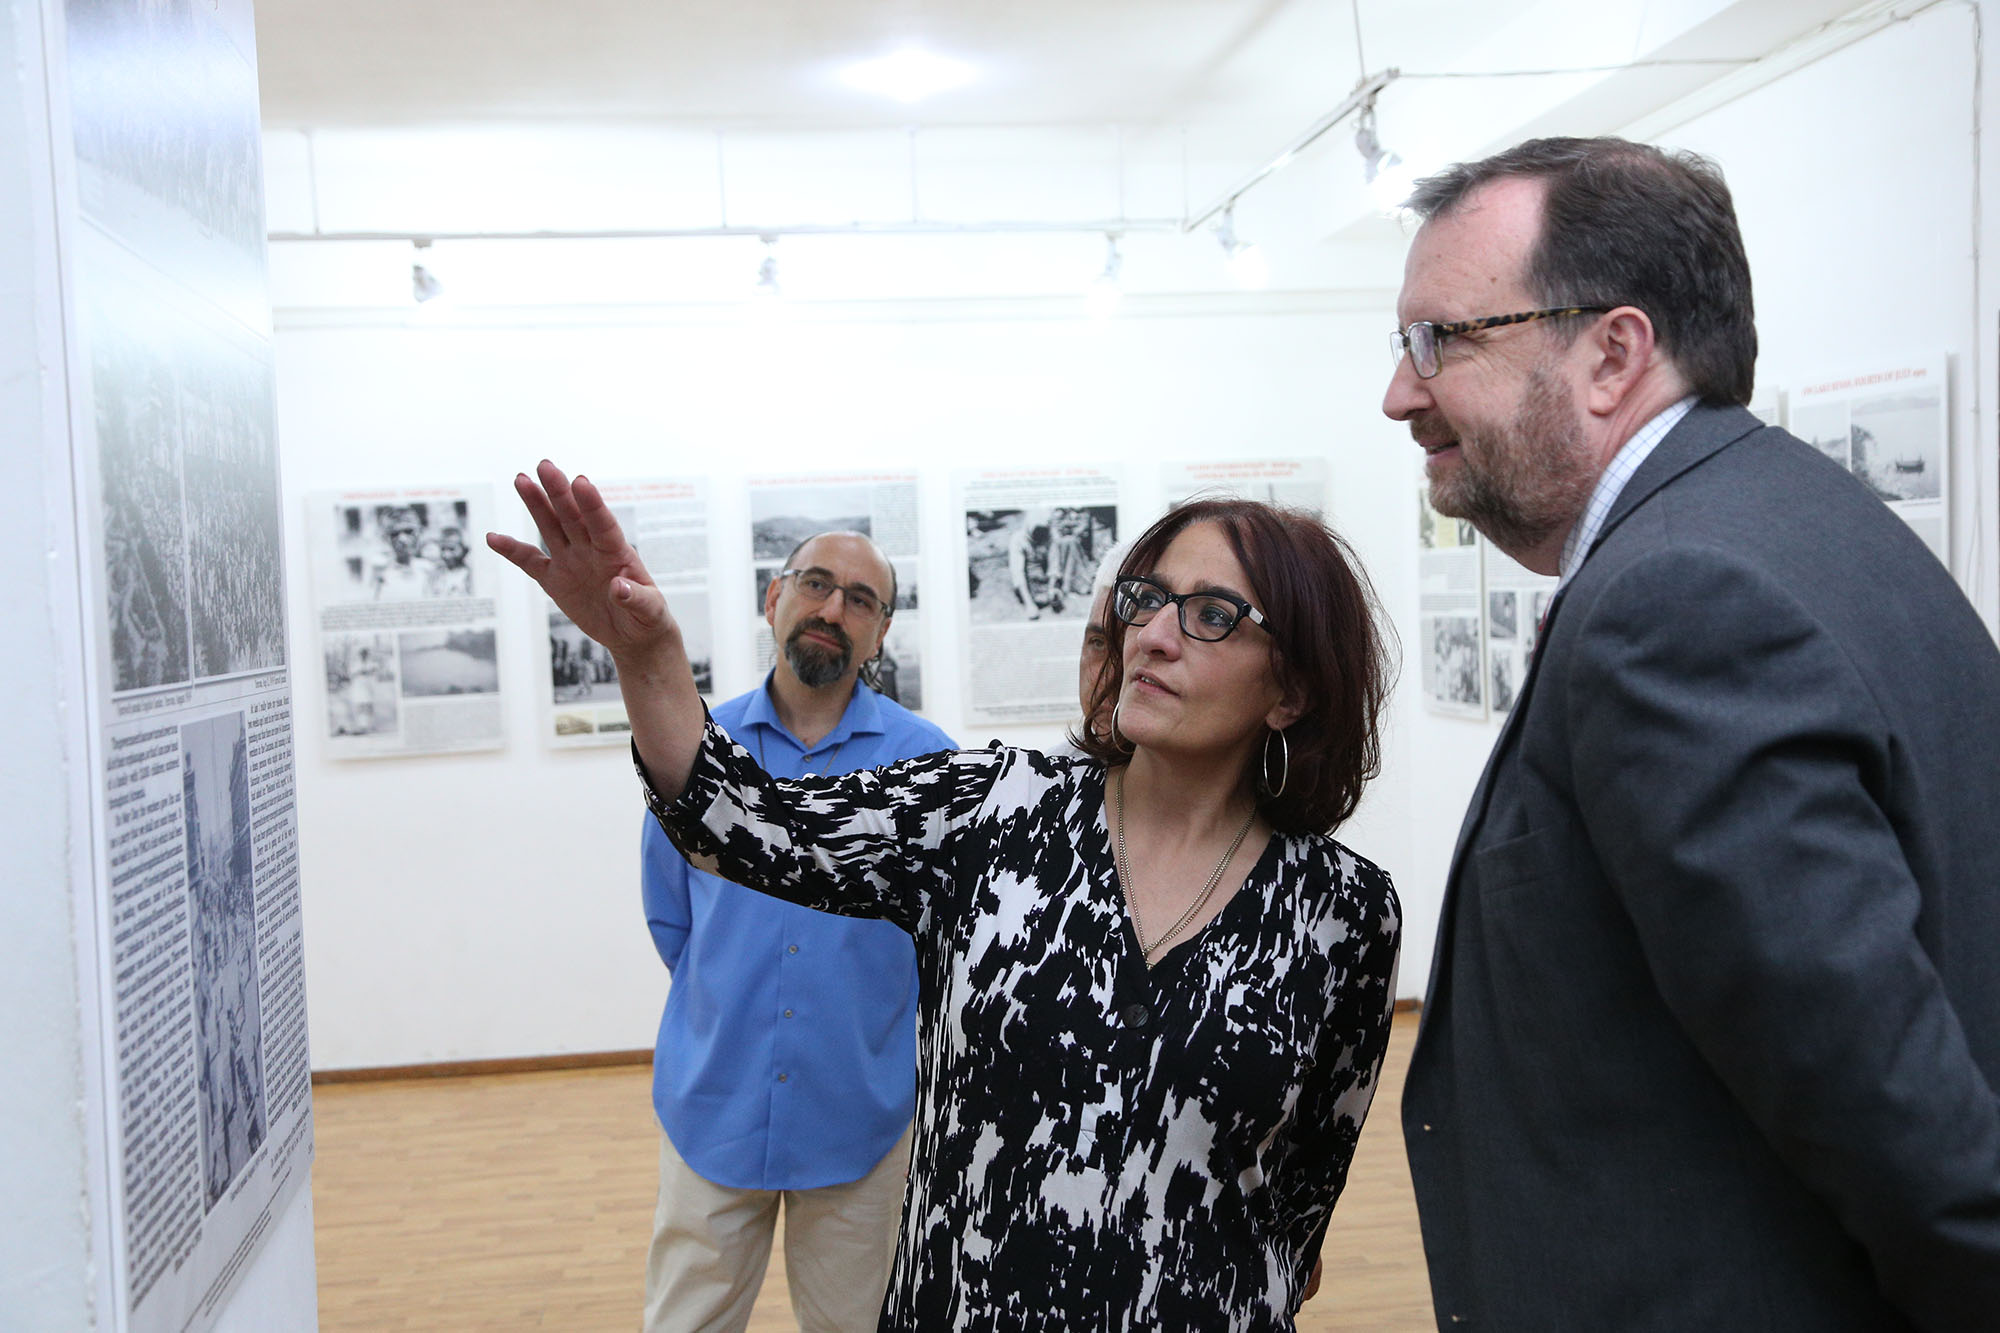 U.S. Ambassador Tours Ani Exhibit on YMCA During the First Republic of Armenia